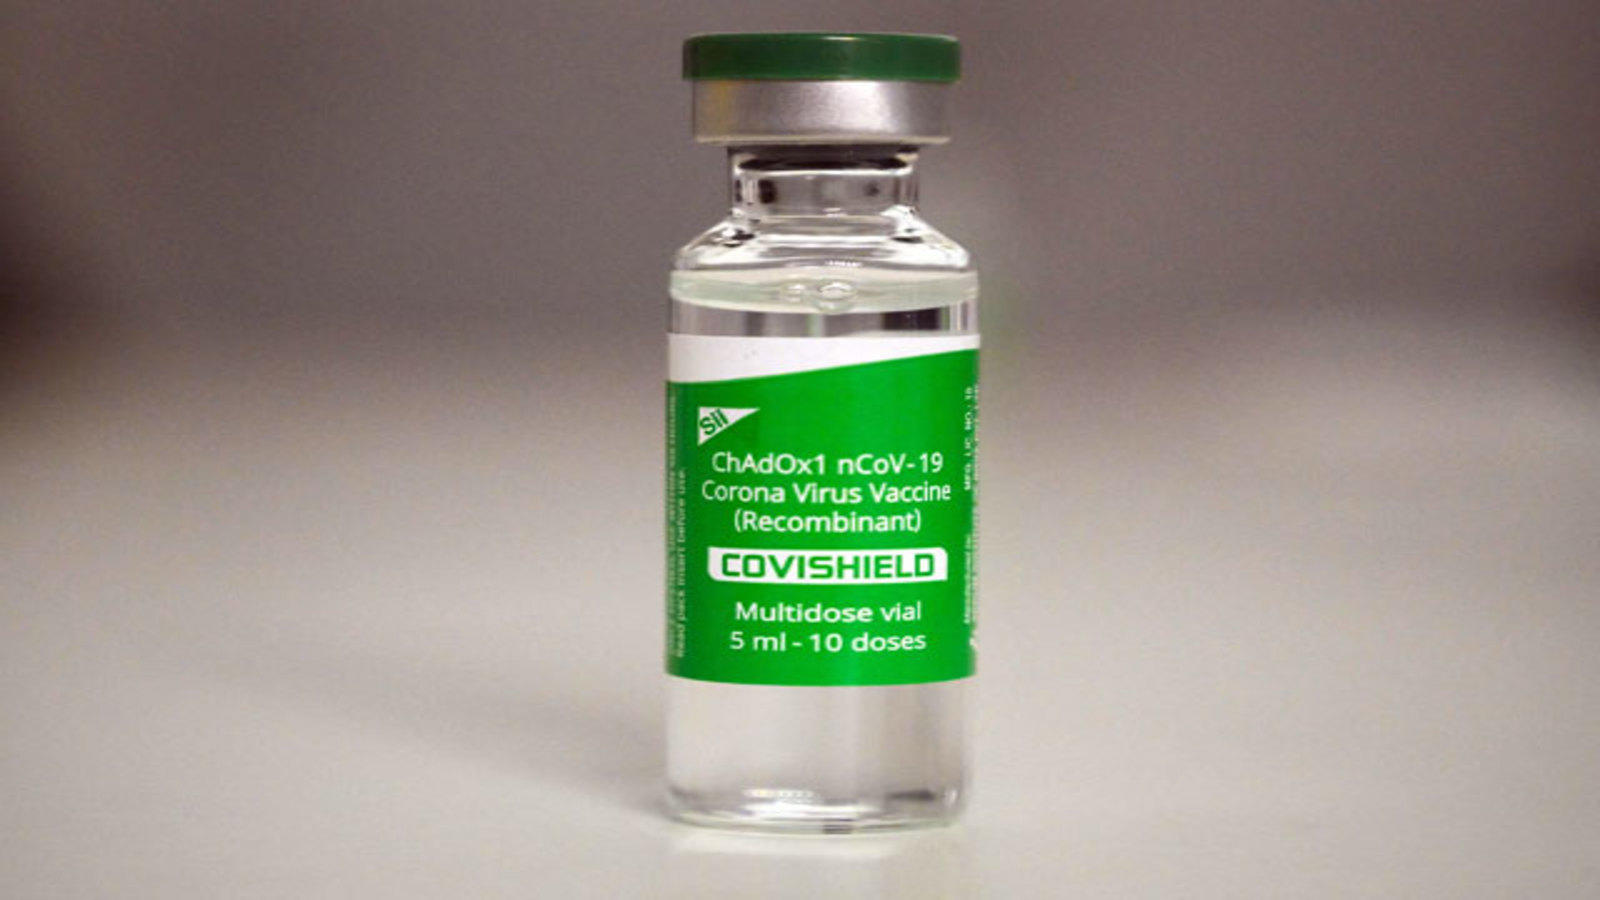 vials of Covishield vaccine